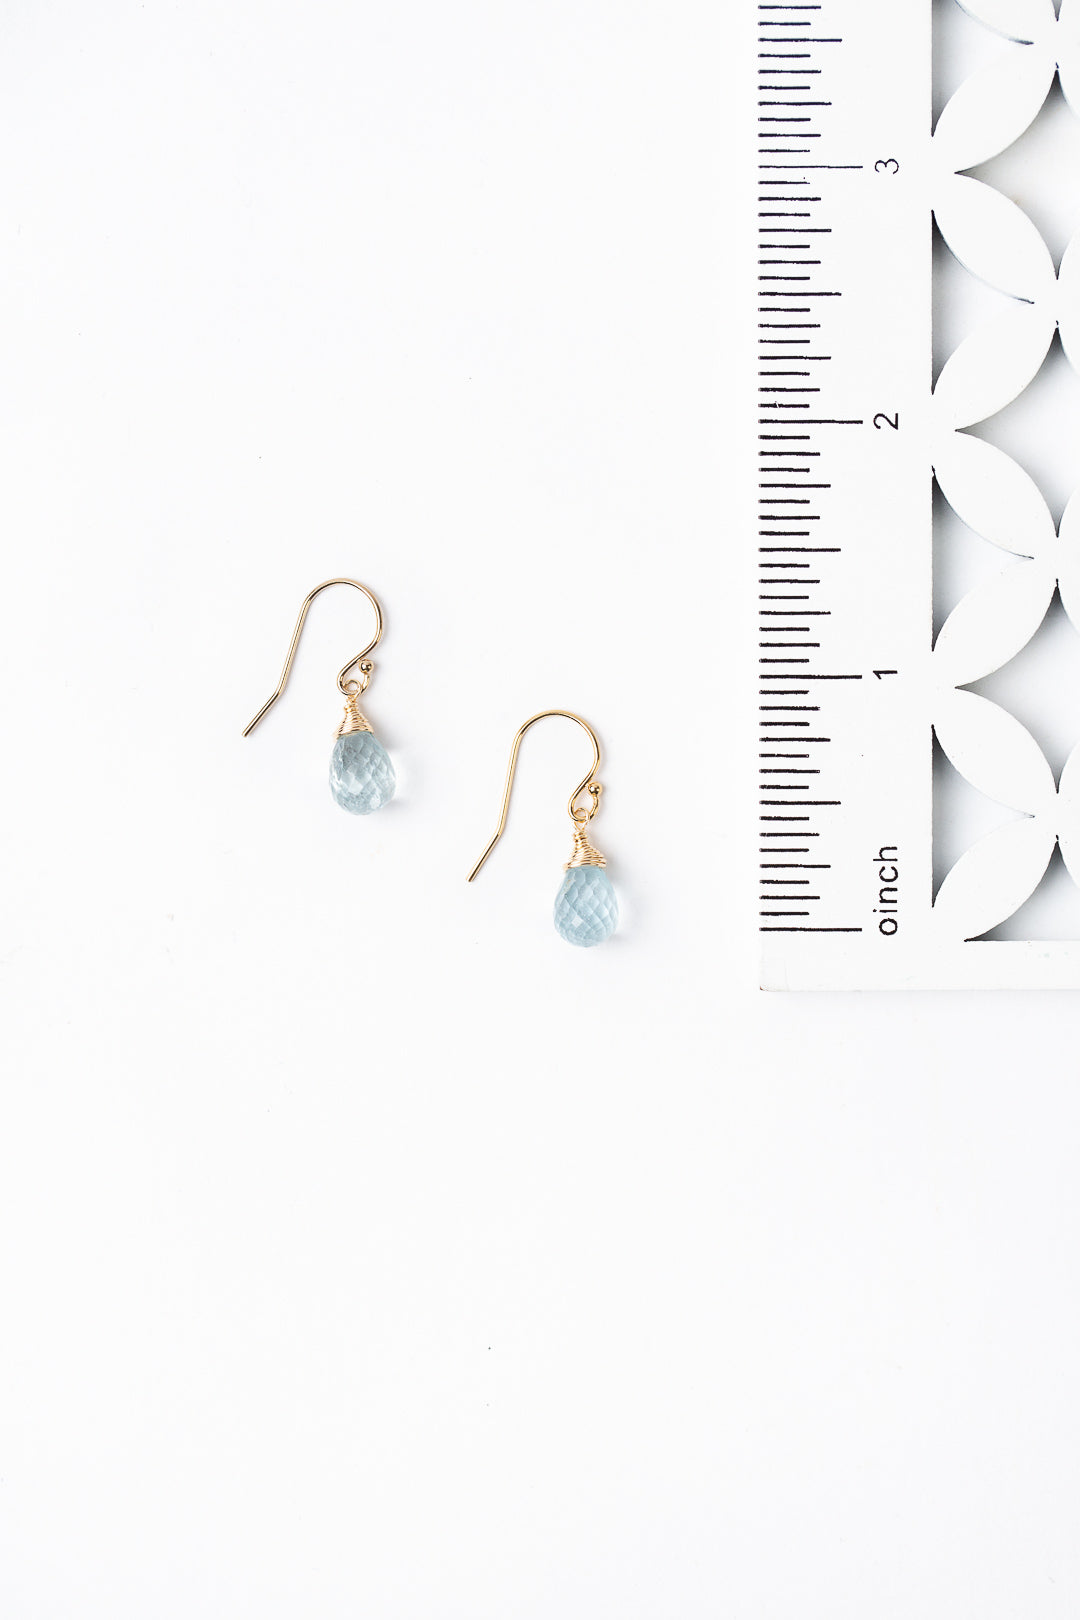 Birthstone March Gold Aquamarine Simple Earrings